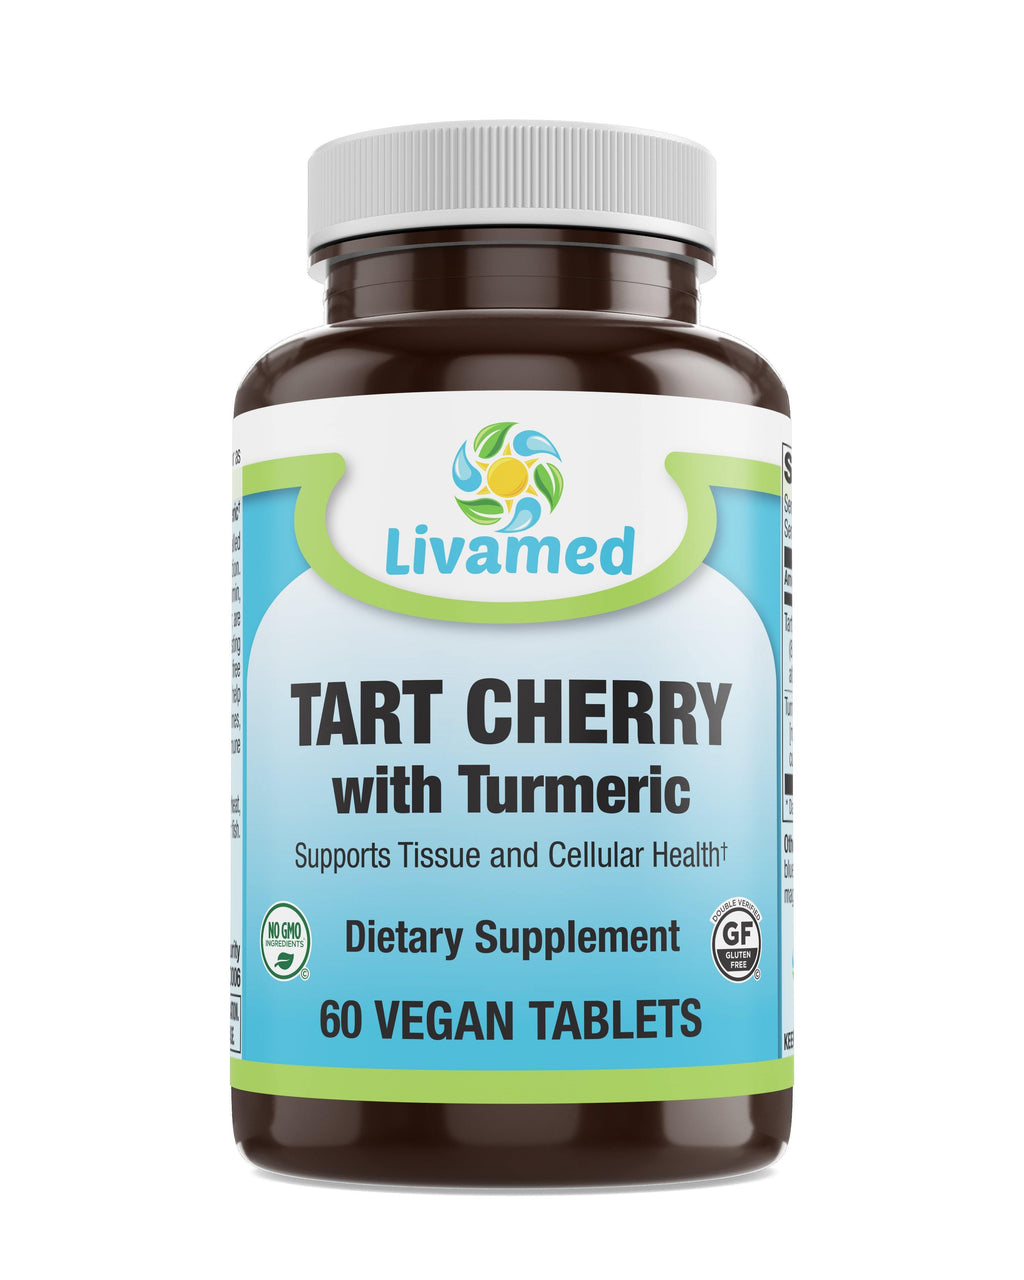 Livamed - Tart Cherry with Turmeric Veg Tabs 60 Count - Livamed Vitamins